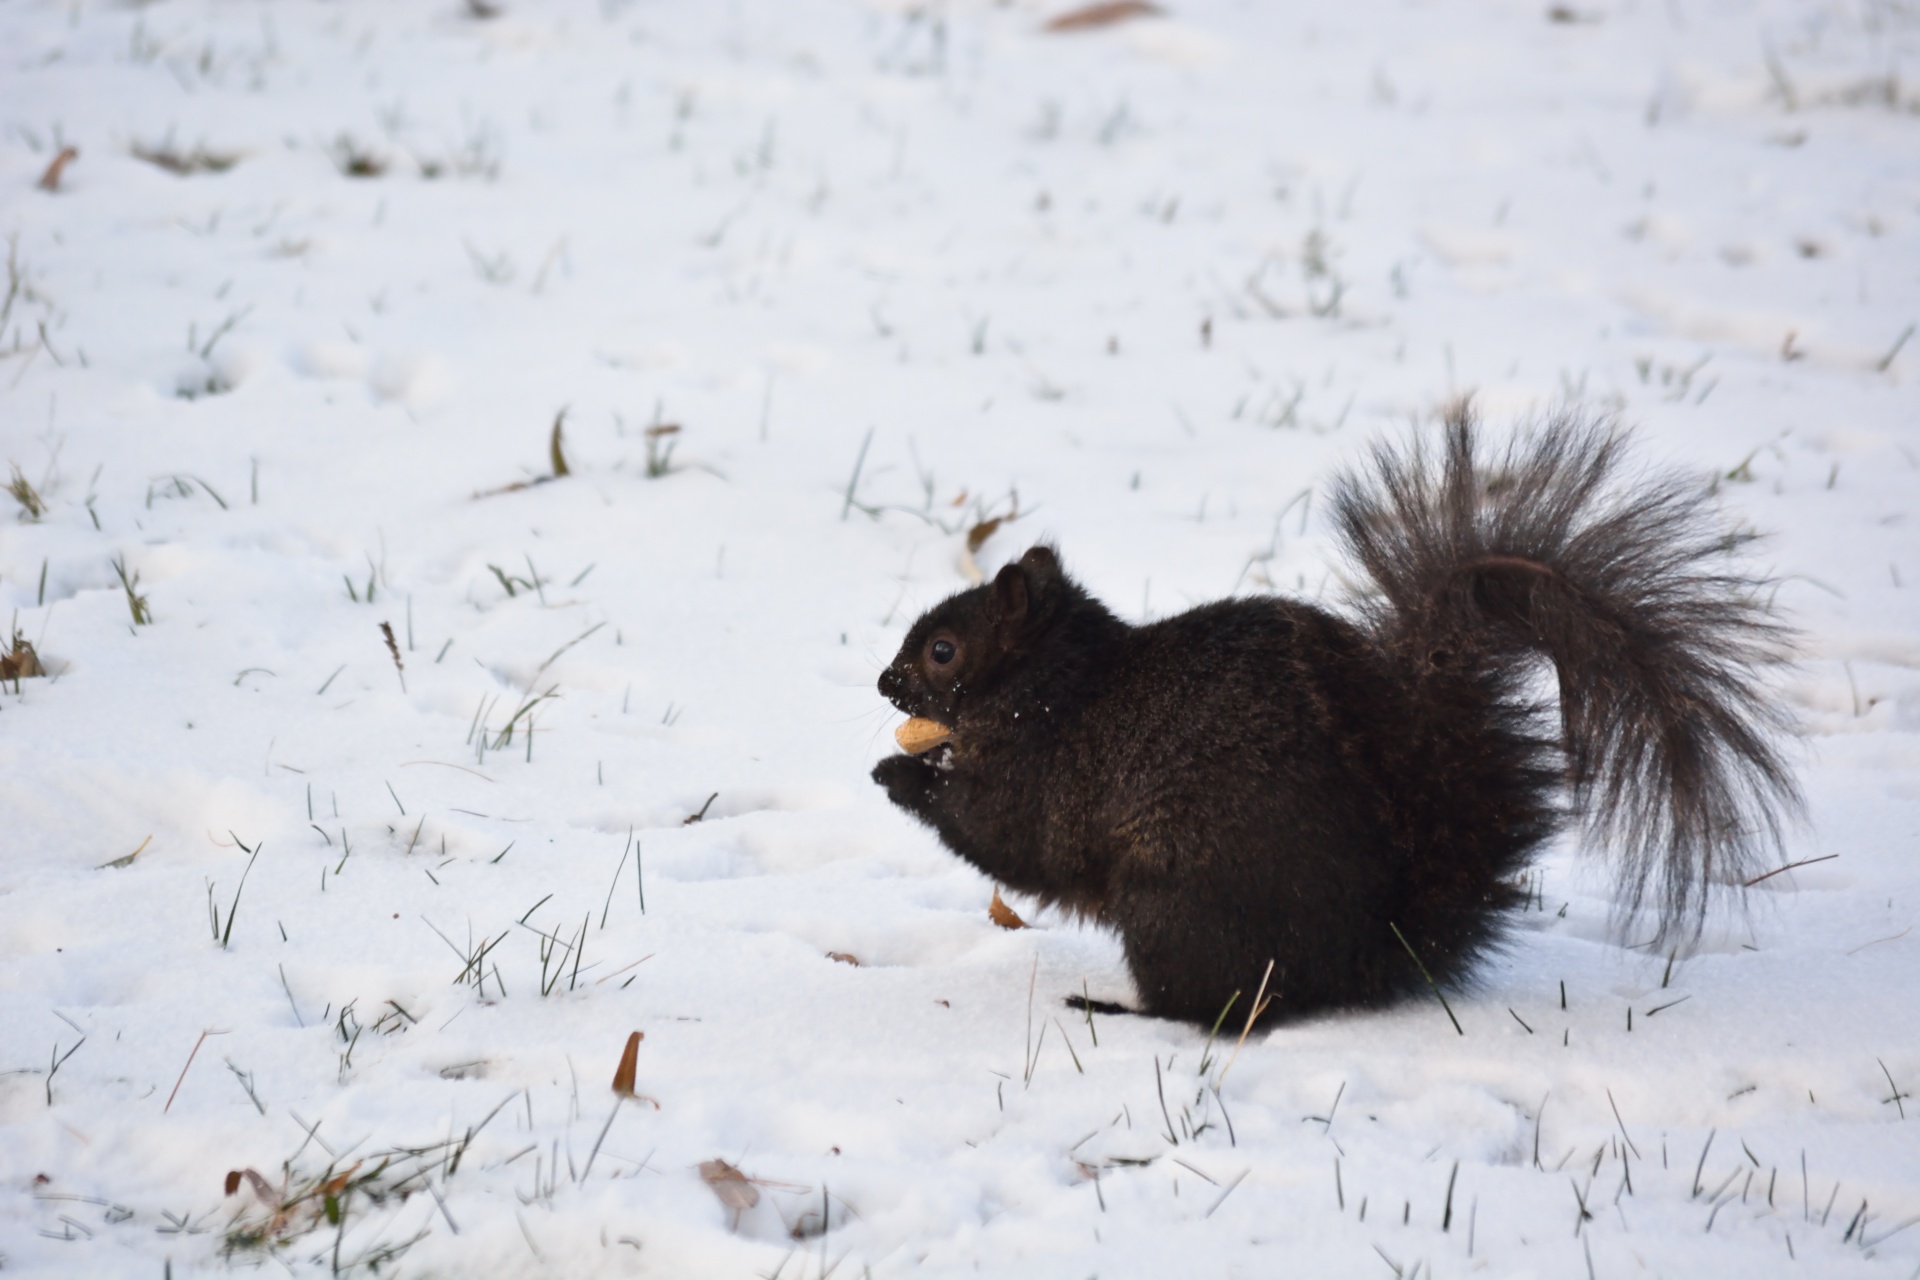 Black squirrel eating a peanut on snow